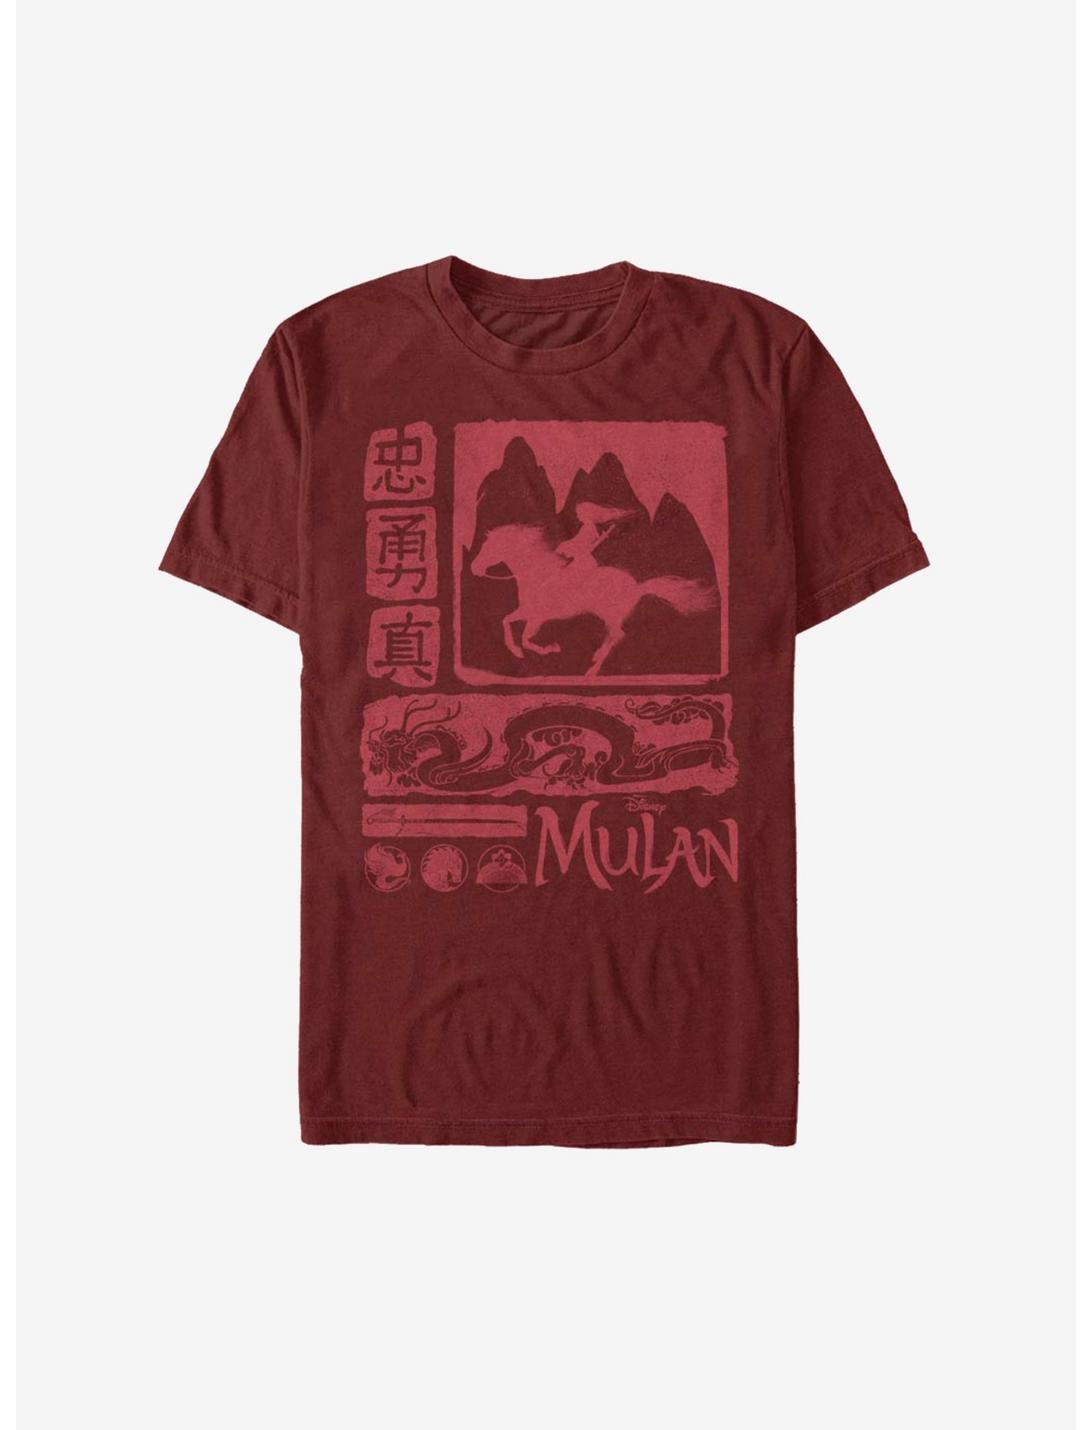 Disney Mulan Live Action Image Blocks T-Shirt, CARDINAL, hi-res